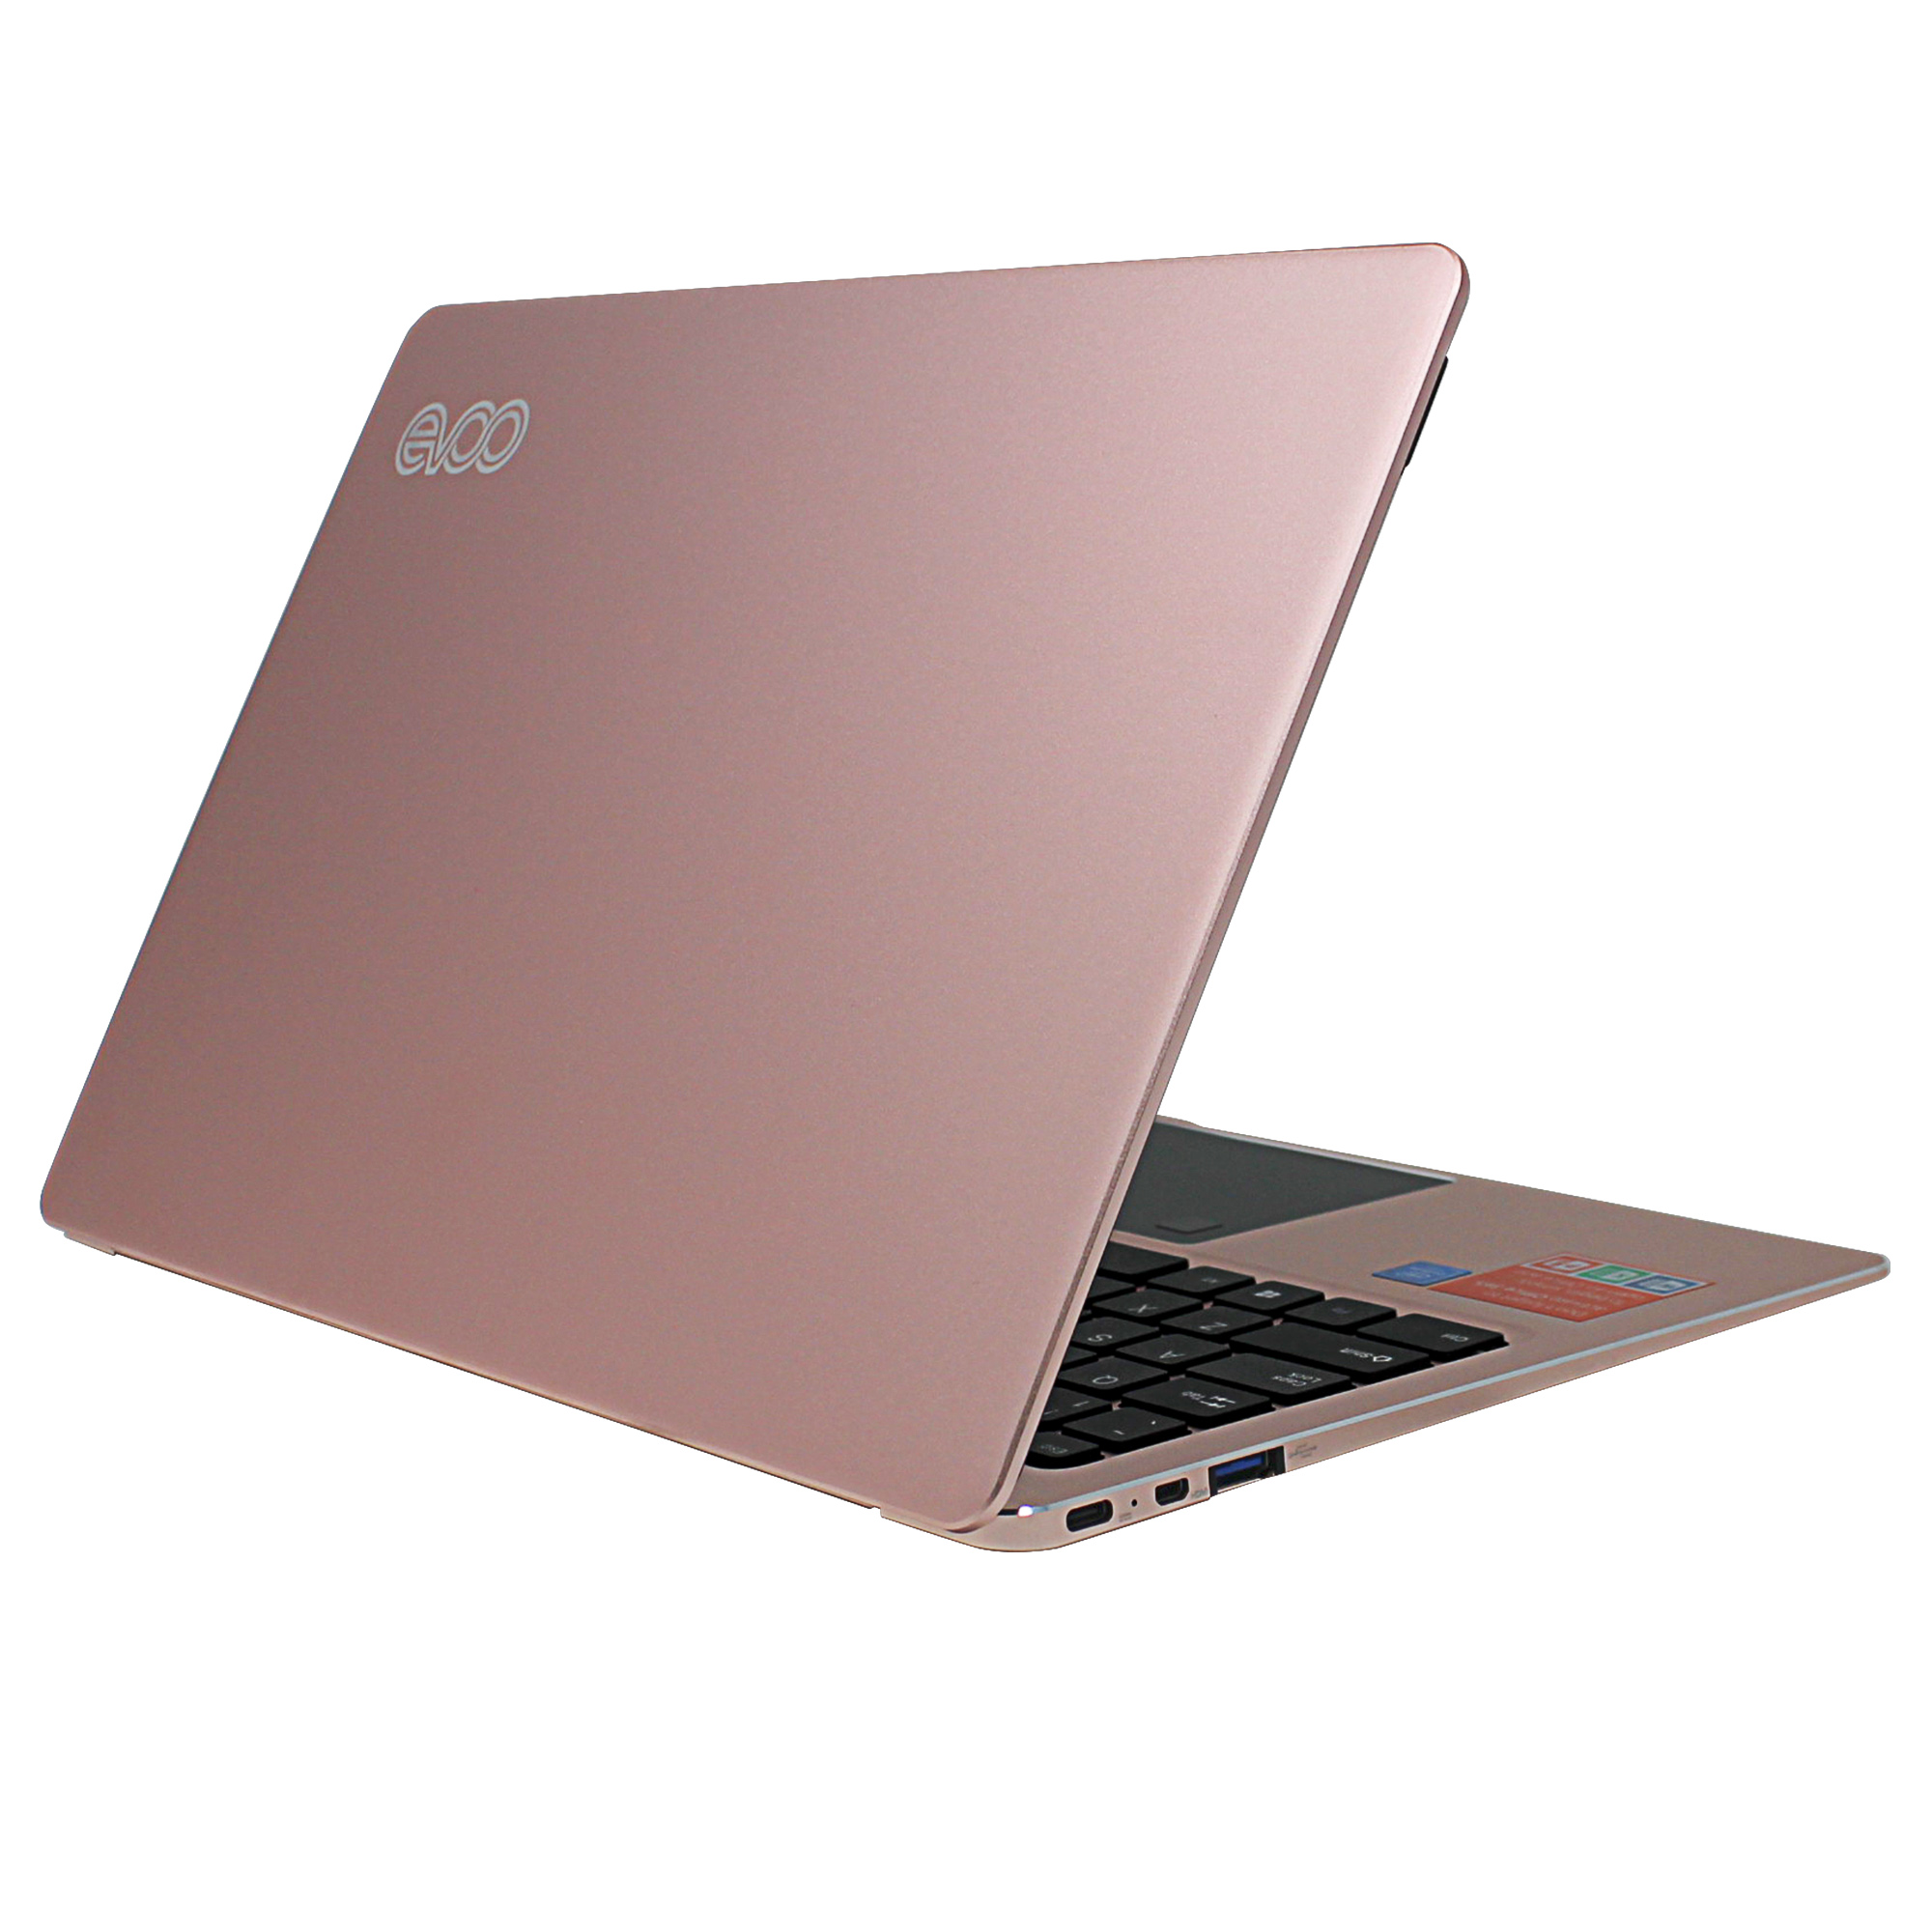 EVOO 14.1" Ultra Thin Laptop - Elite Series, Intel Celeron CPU, 4GB Memory, 32GB, Windows 10 S, Windows Hello (Fingerprint Scanner), Rose Gold - image 1 of 5